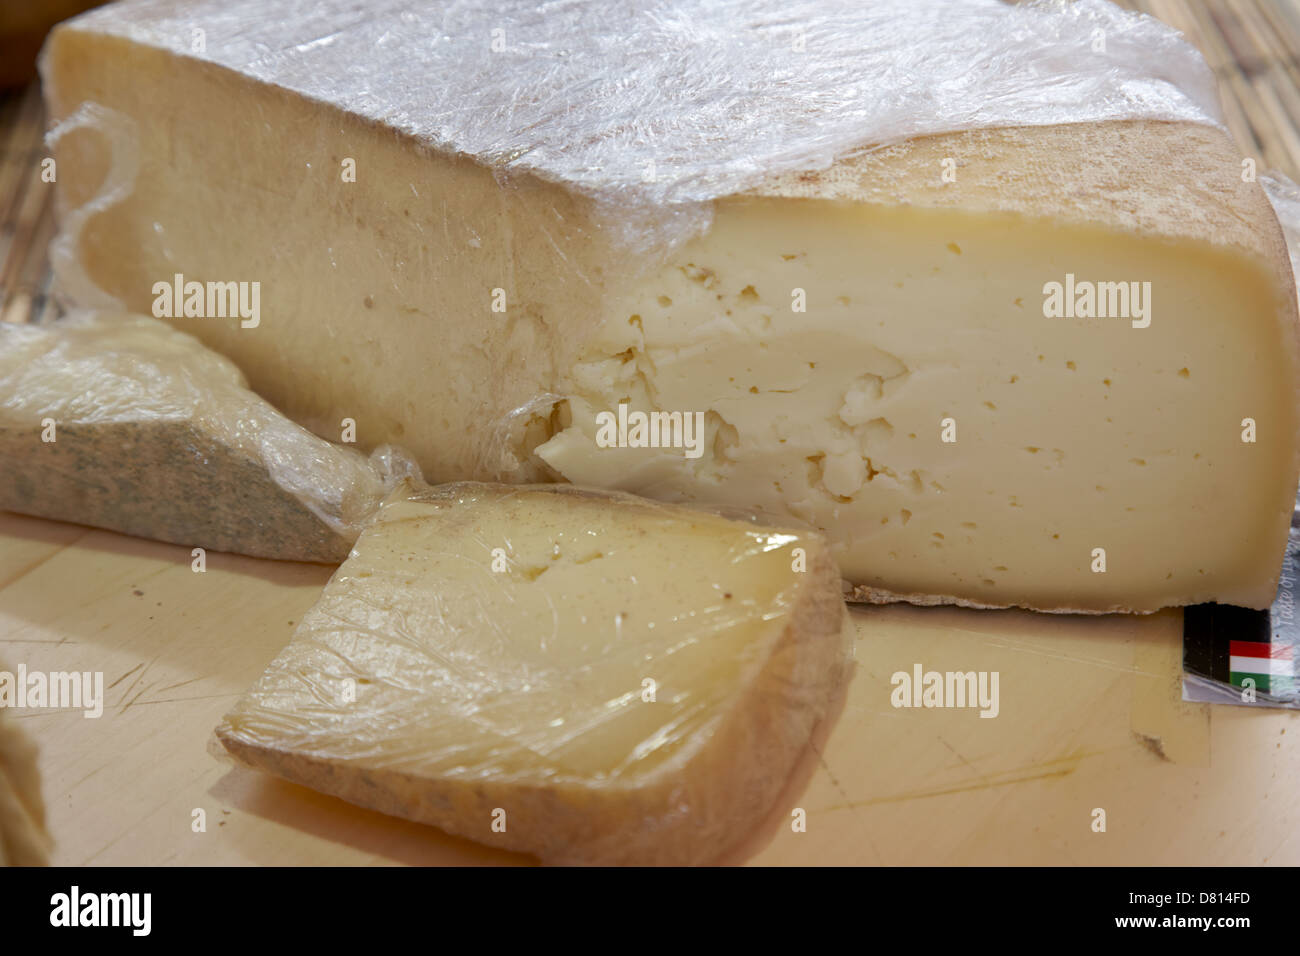 asiago italian cows milk cheese Stock Photo